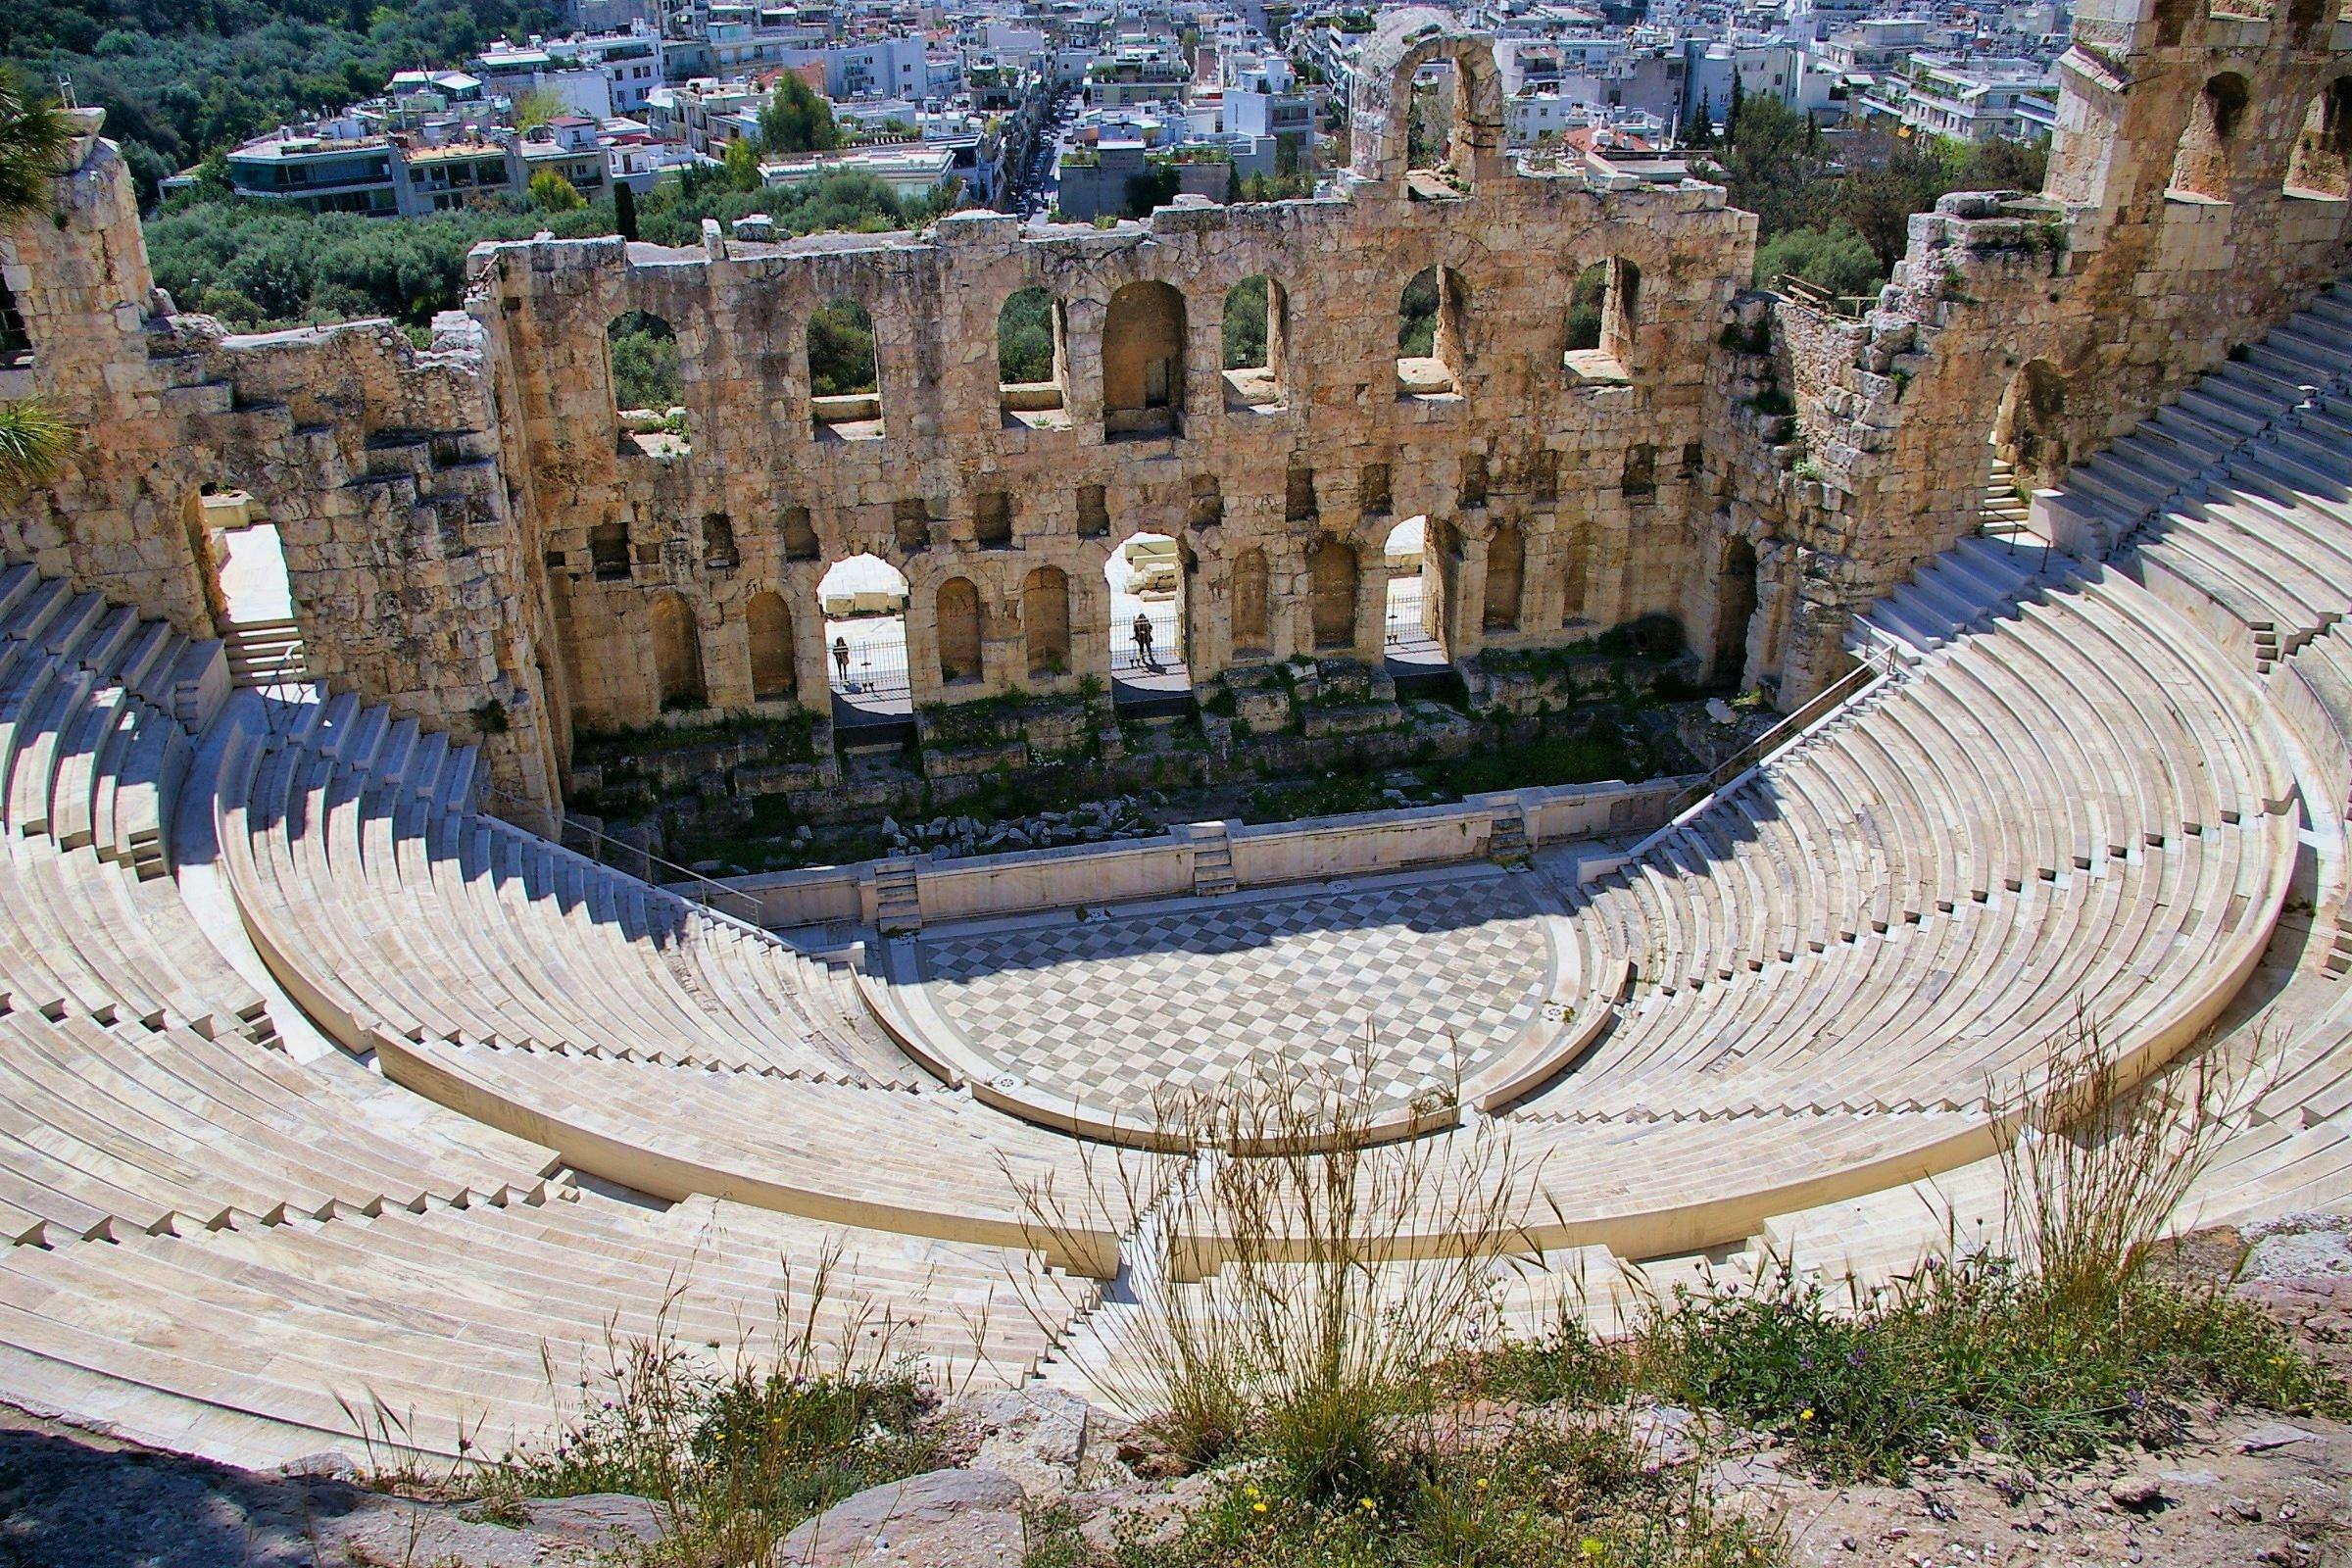 Athens – The cradle of Democracy